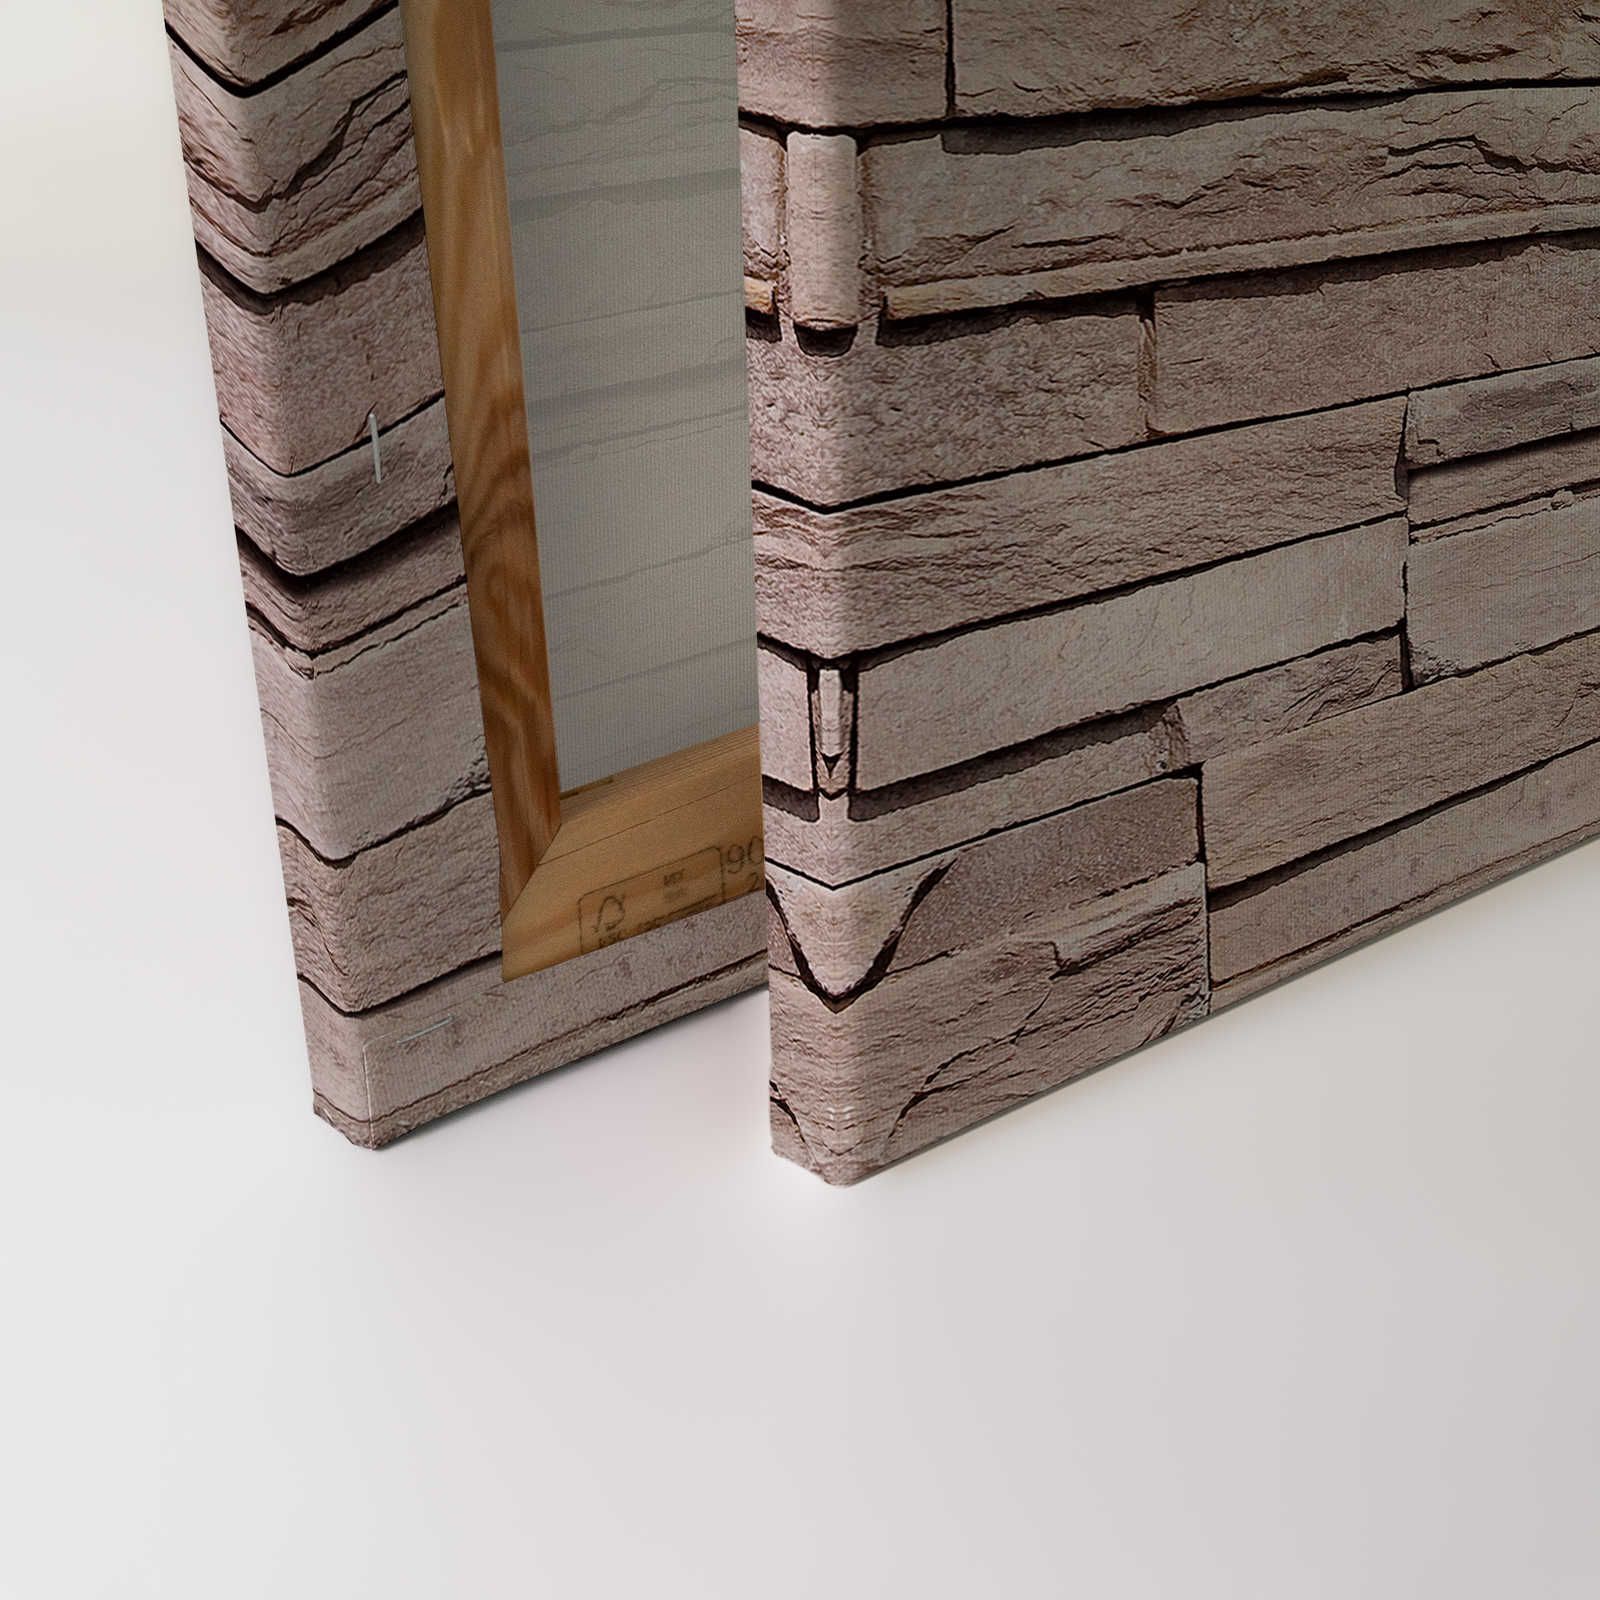             Leinwandbild 3D Steinoptik, hellbraune Trockenmauer – 0,90 m x 0,60 m
        